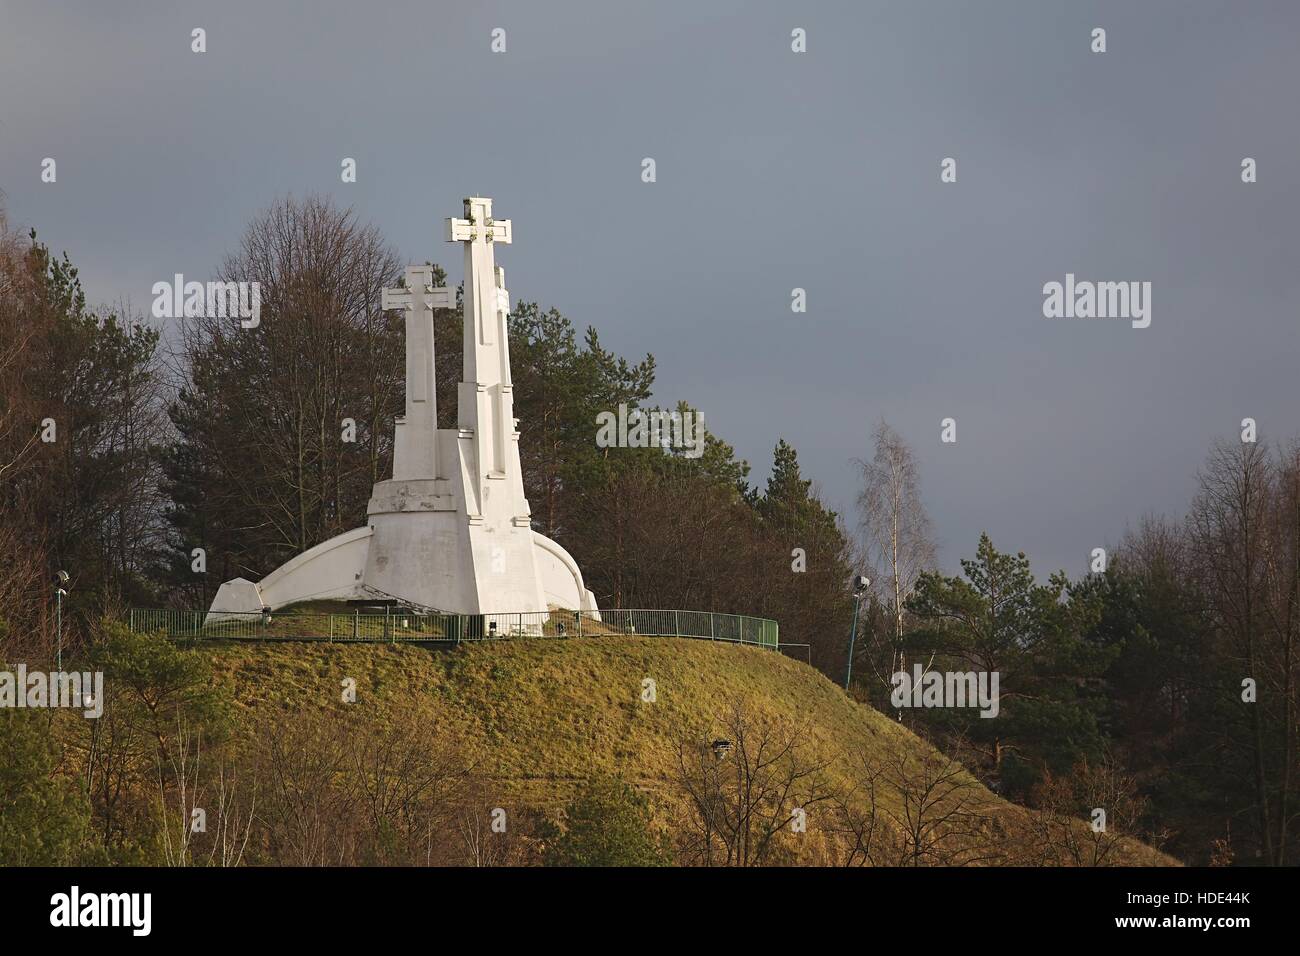 Kreuze auf einem Hügel Stockfoto